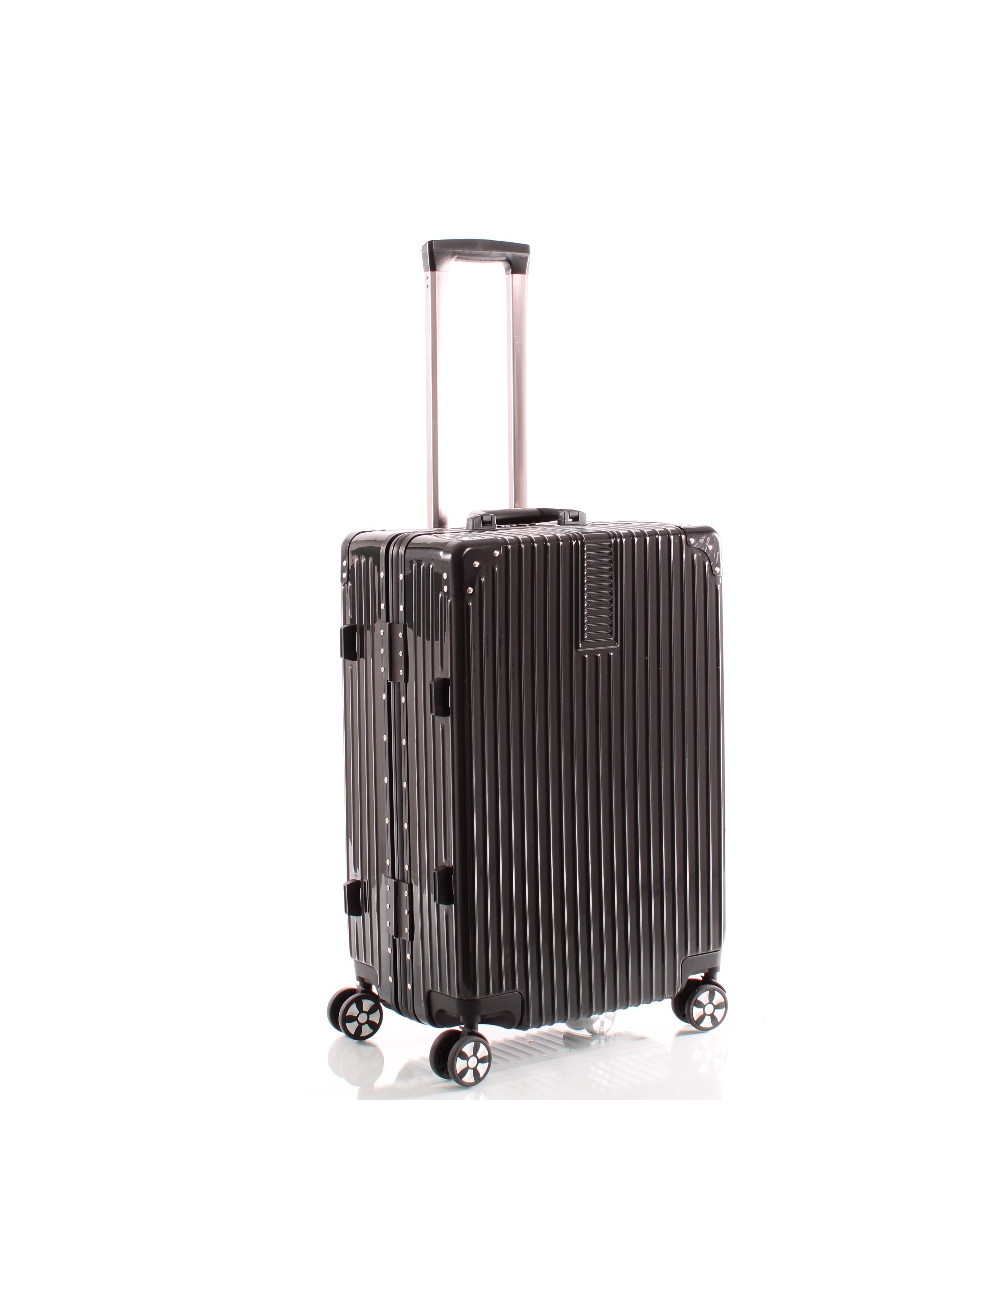 Choisir son bagage : roues, taille, volume et garantie